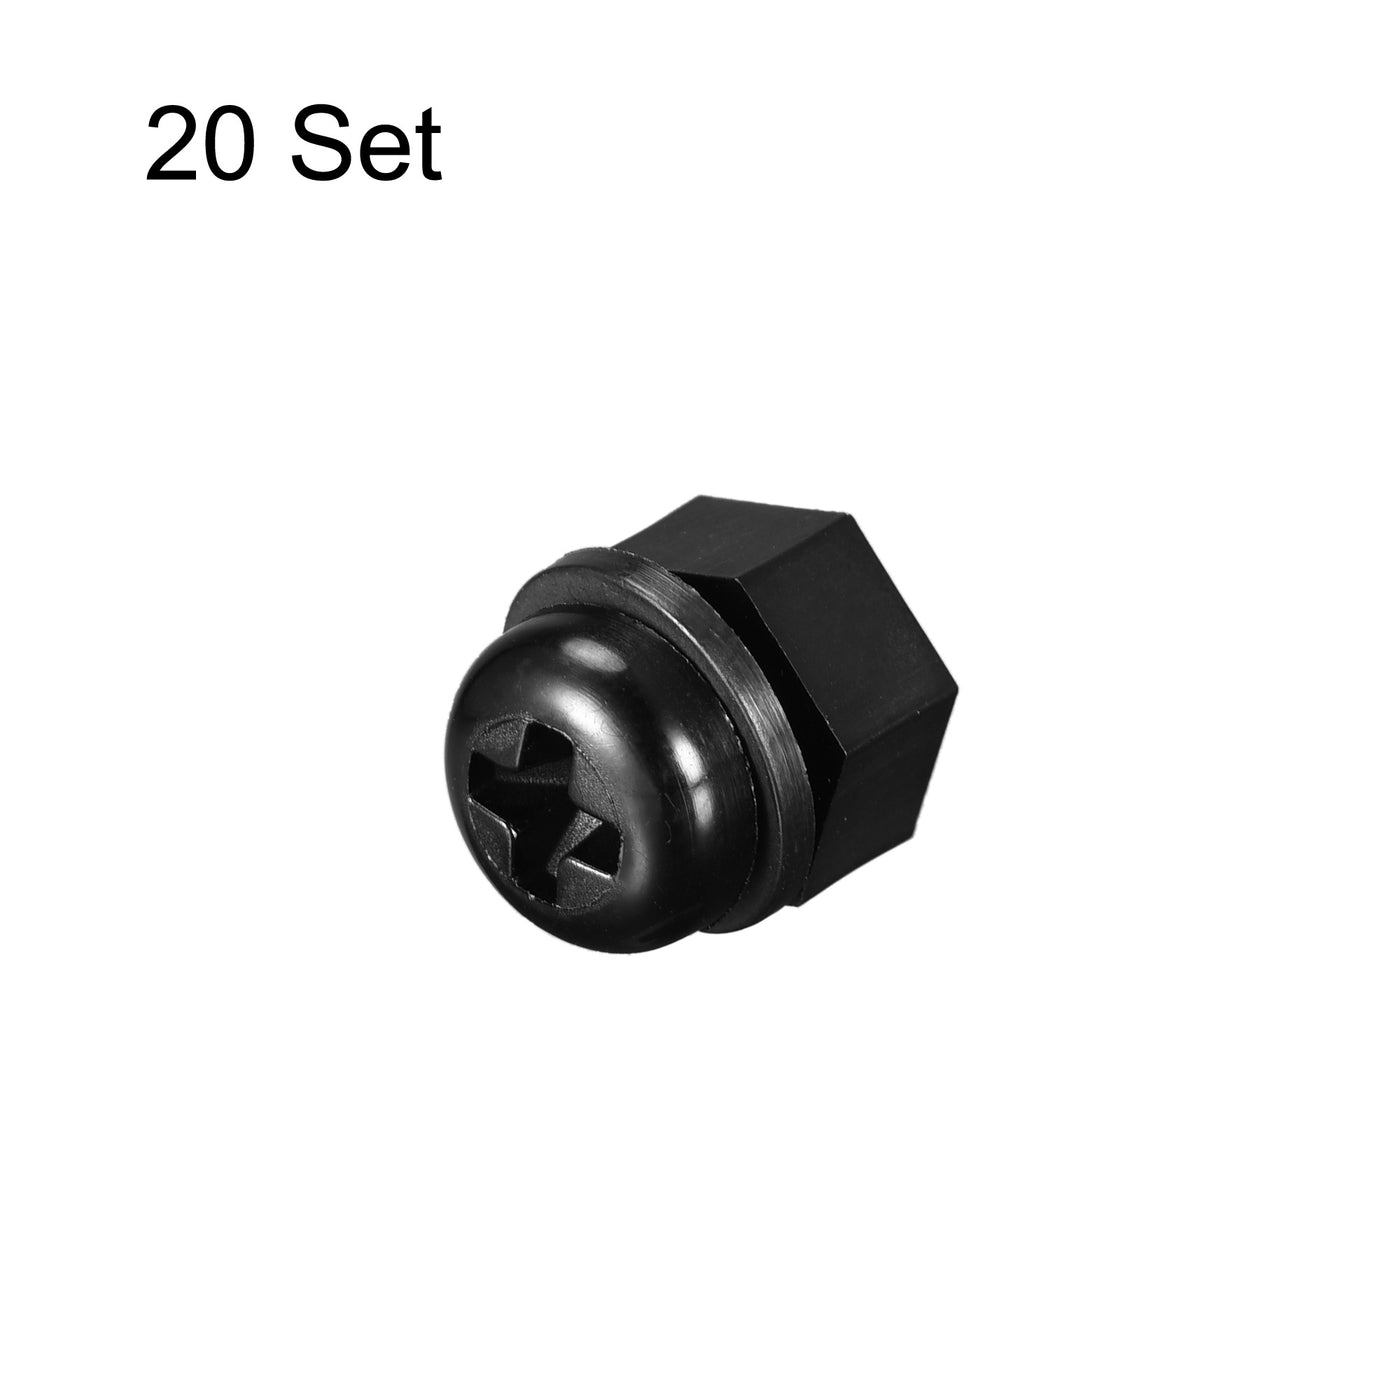 Uxcell Uxcell M5x45mm Nylon Screw Nut Washer Assortment Kit Black 20 Set